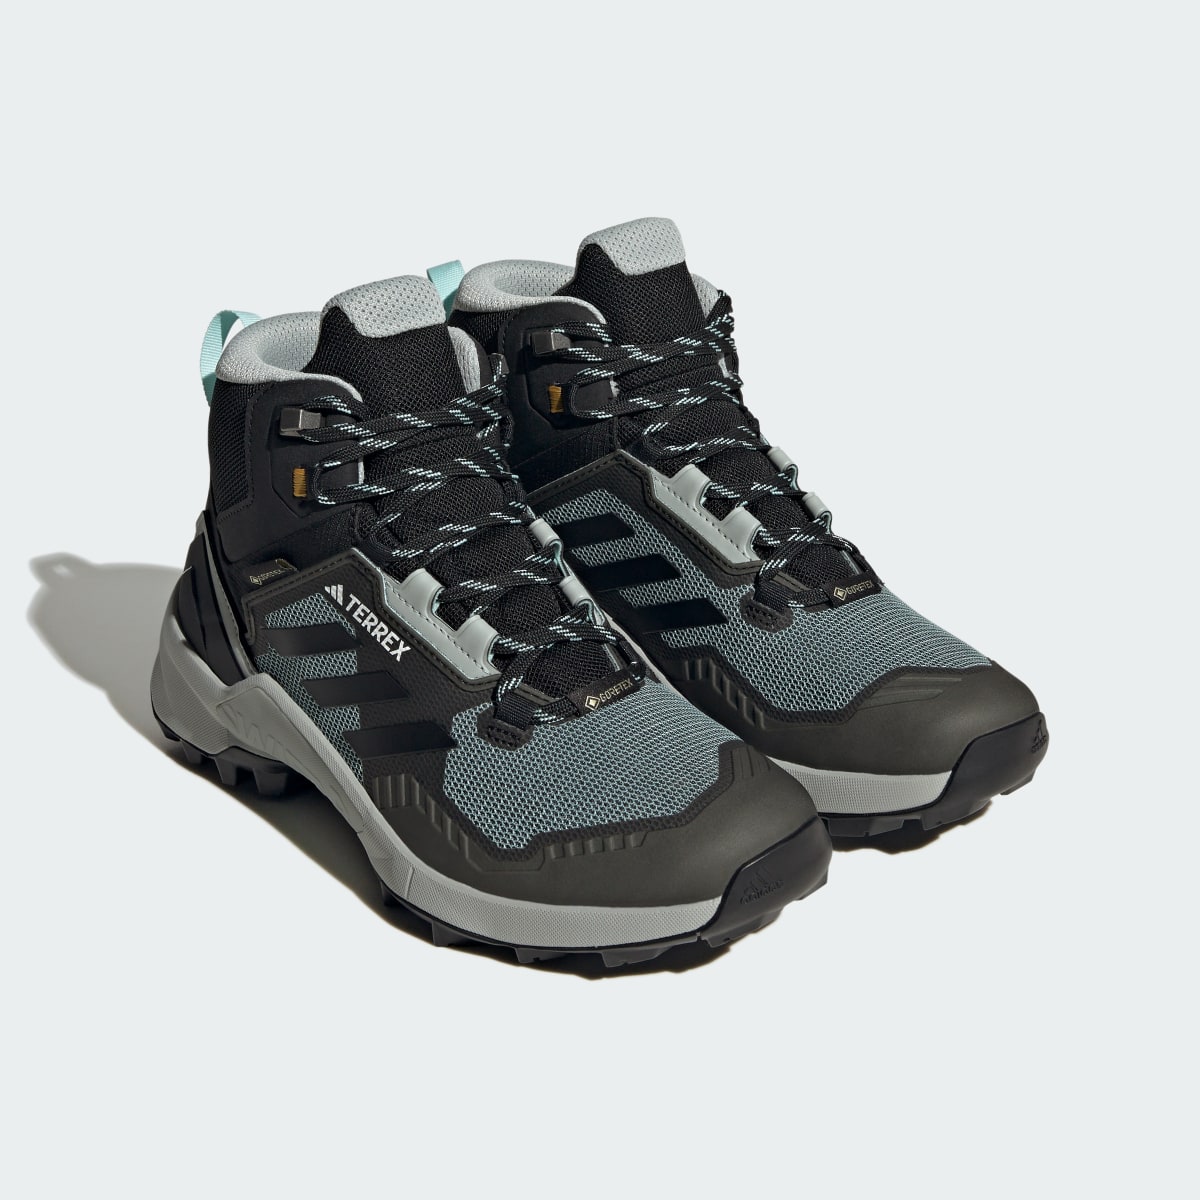 Adidas Chaussure de randonnée Terrex Swift R3 Mid GORE-TEX. 9